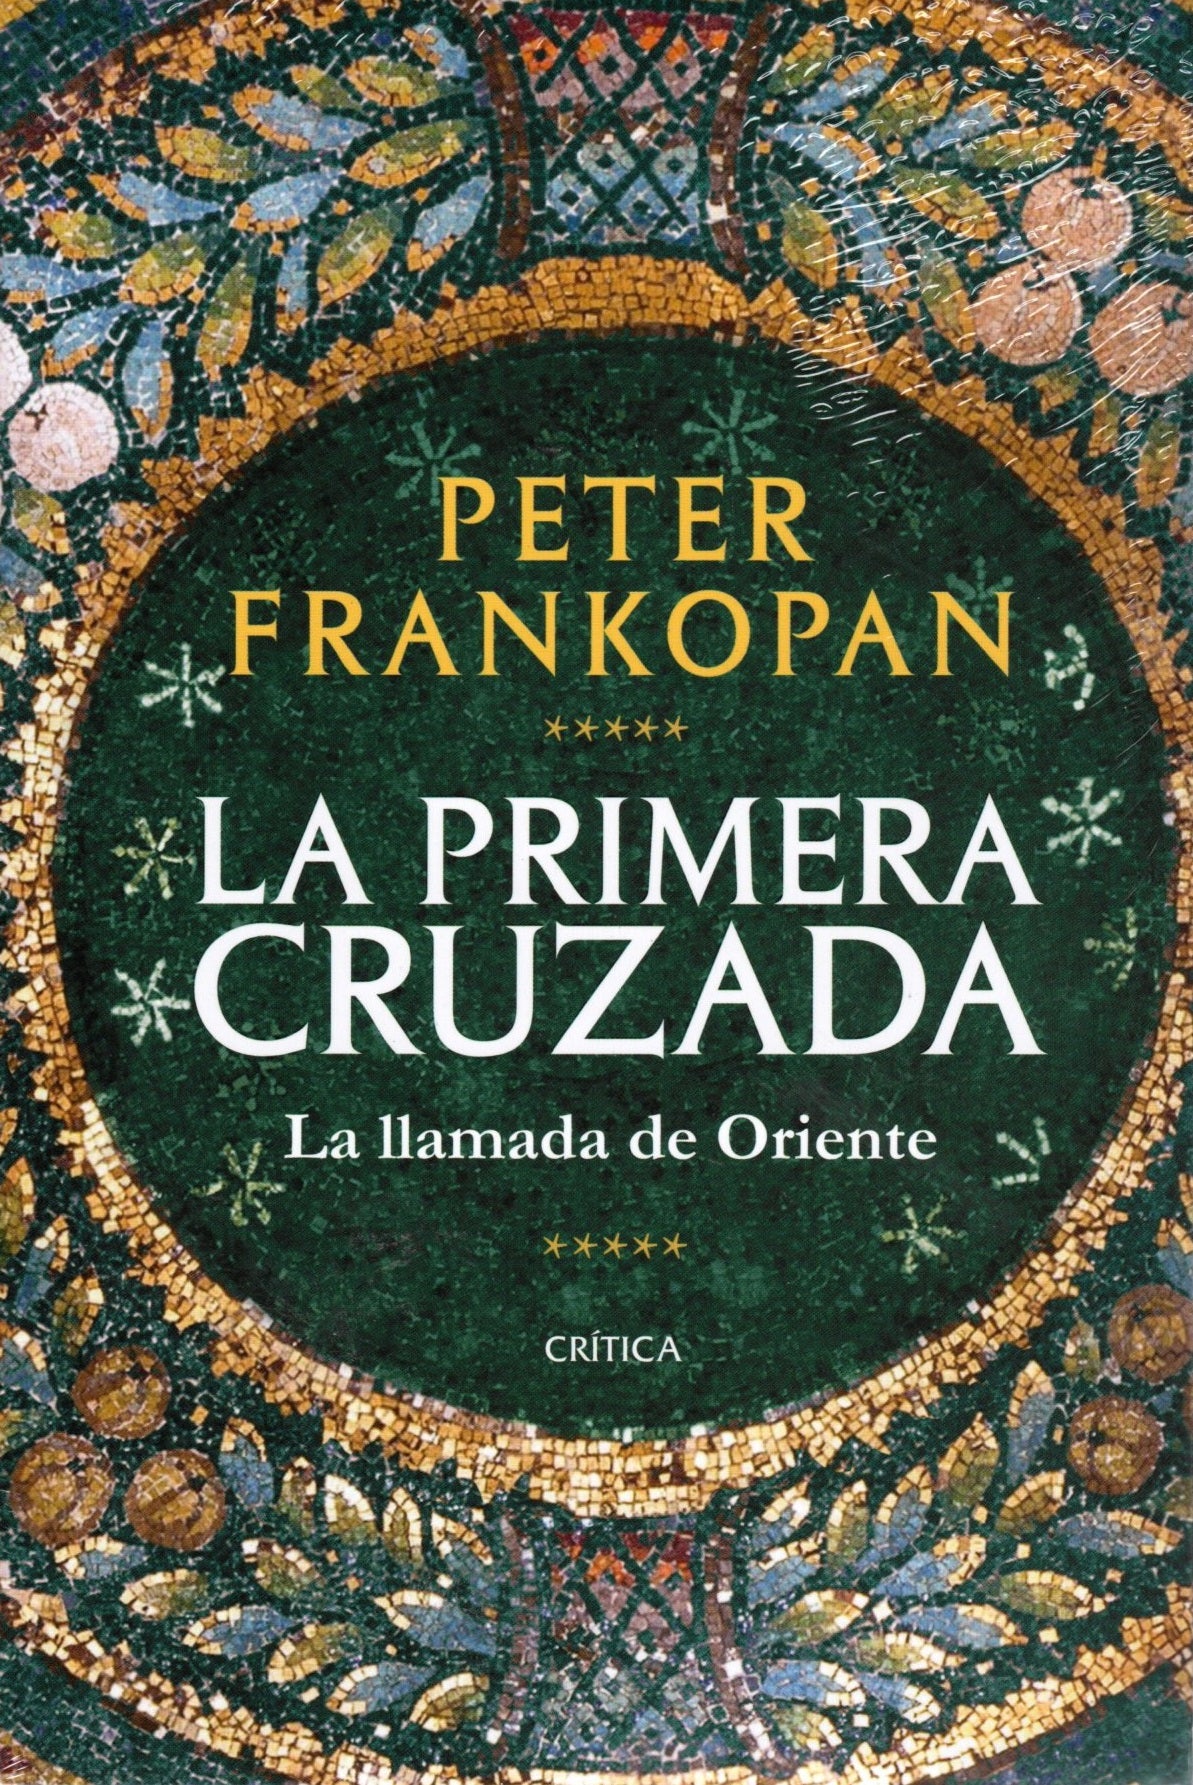 Libro Peter Frankopan -La Primera Cruzada